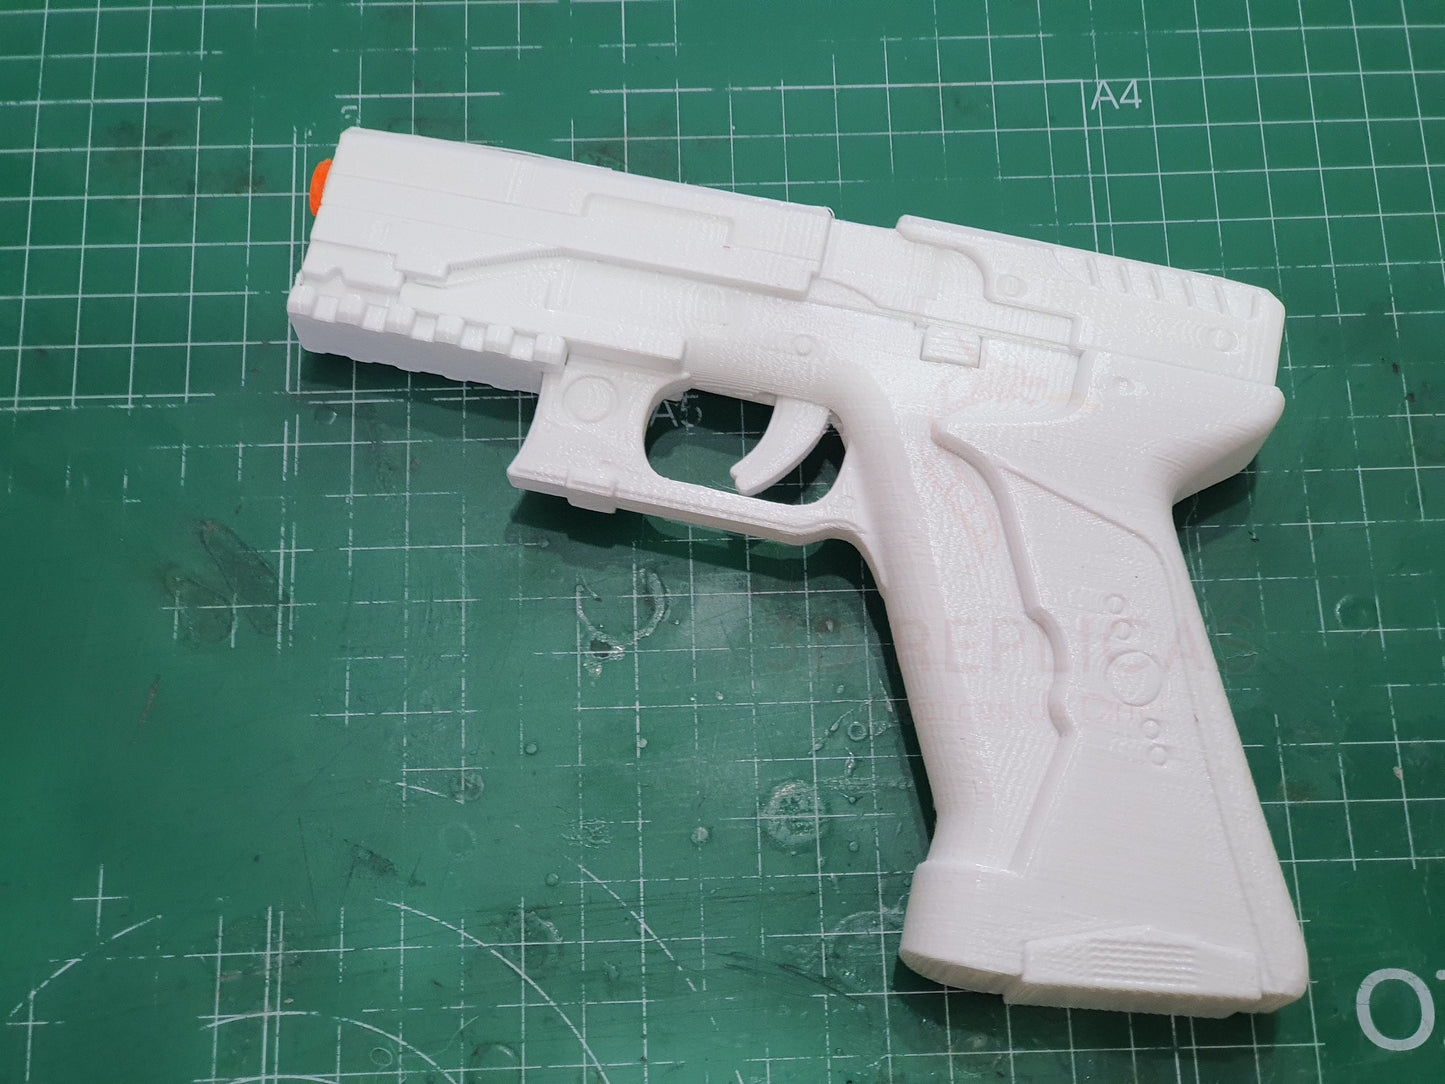 Ghost in the Shell Major's Thermoptic Pistol Blaster Gun Cosplay Prop Replica - WHITE